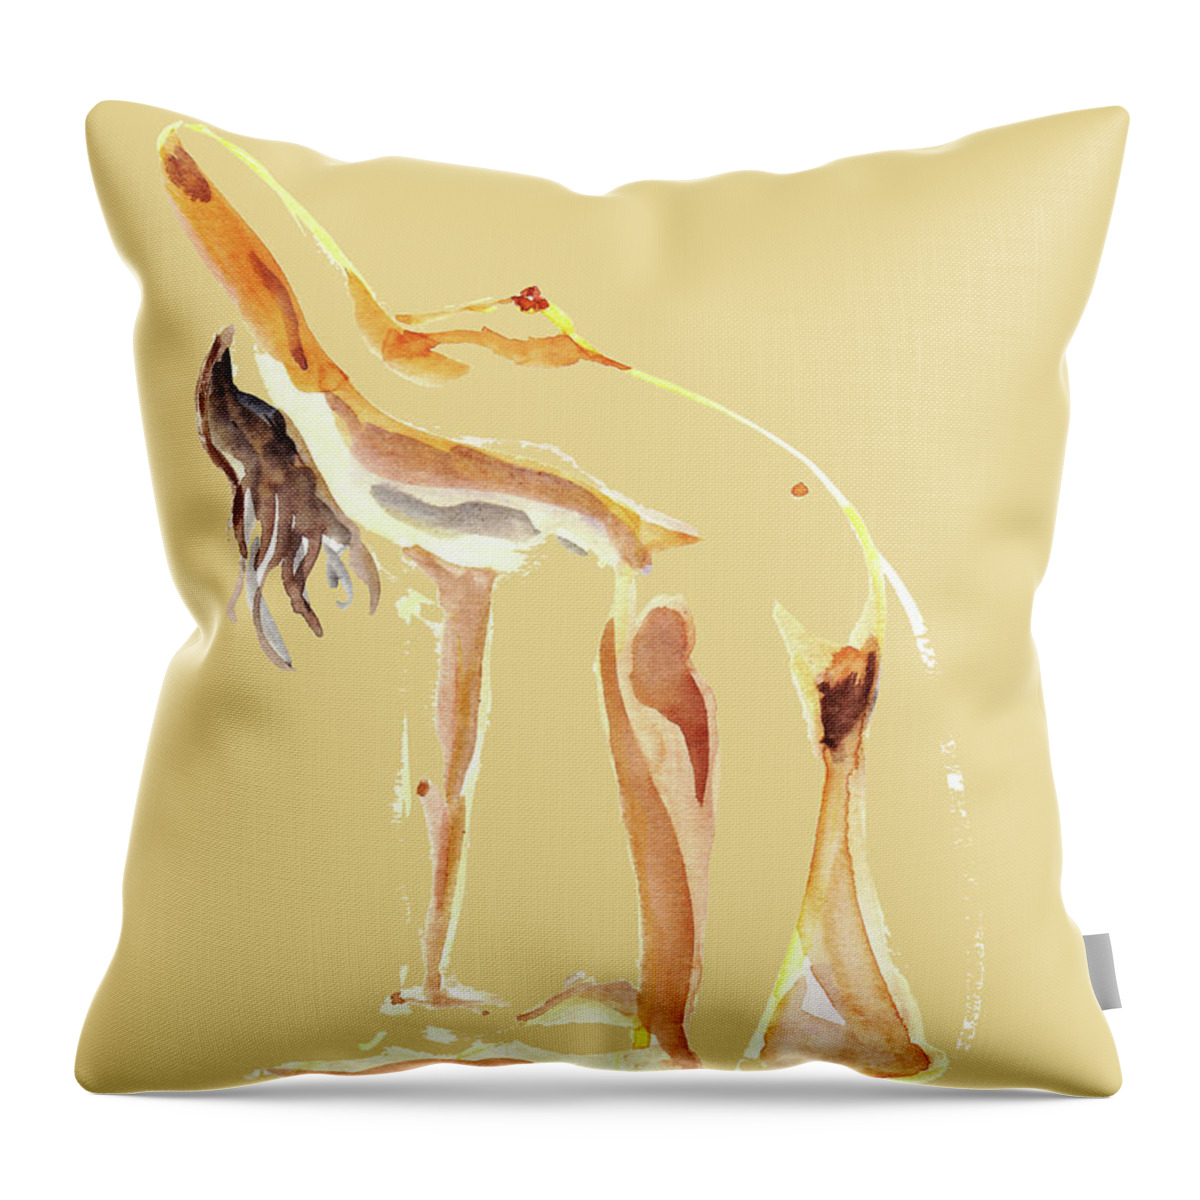 Nude Throw Pillow featuring the painting Nude Model Gesture XXIV by Irina Sztukowski